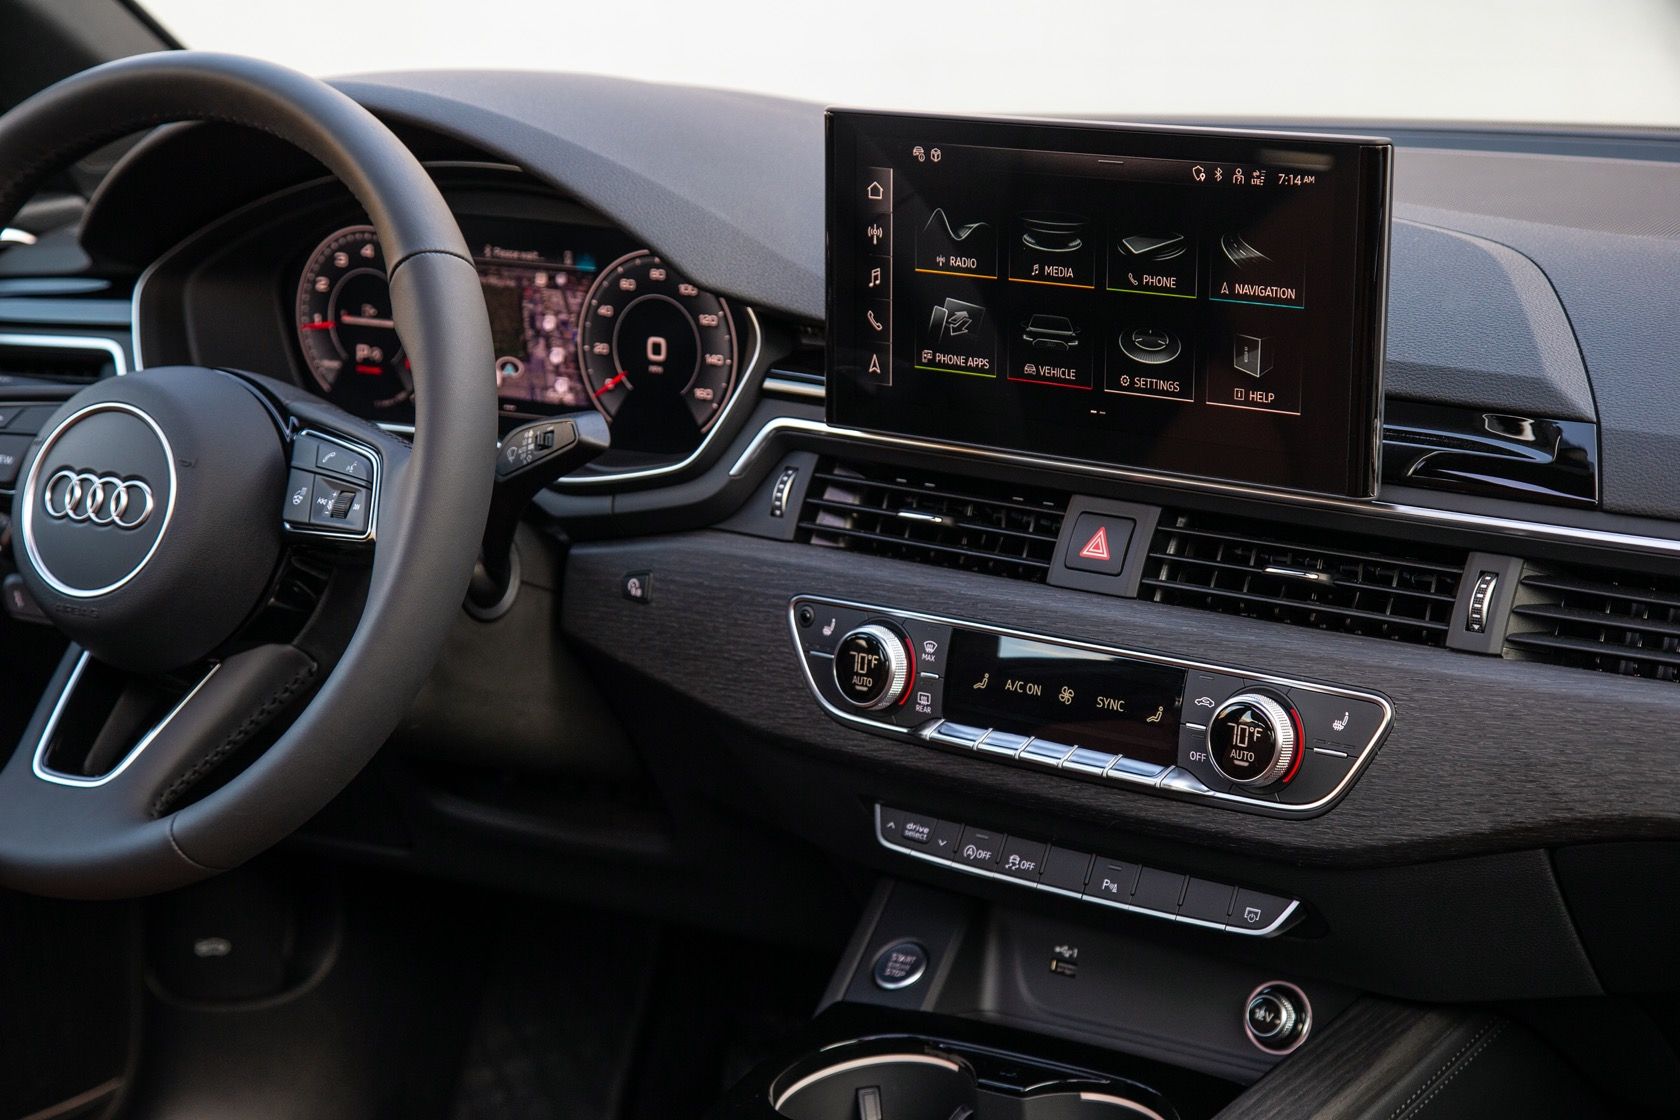 Audi Q7 interior with Modular Infotainment Toolkit (MIT)